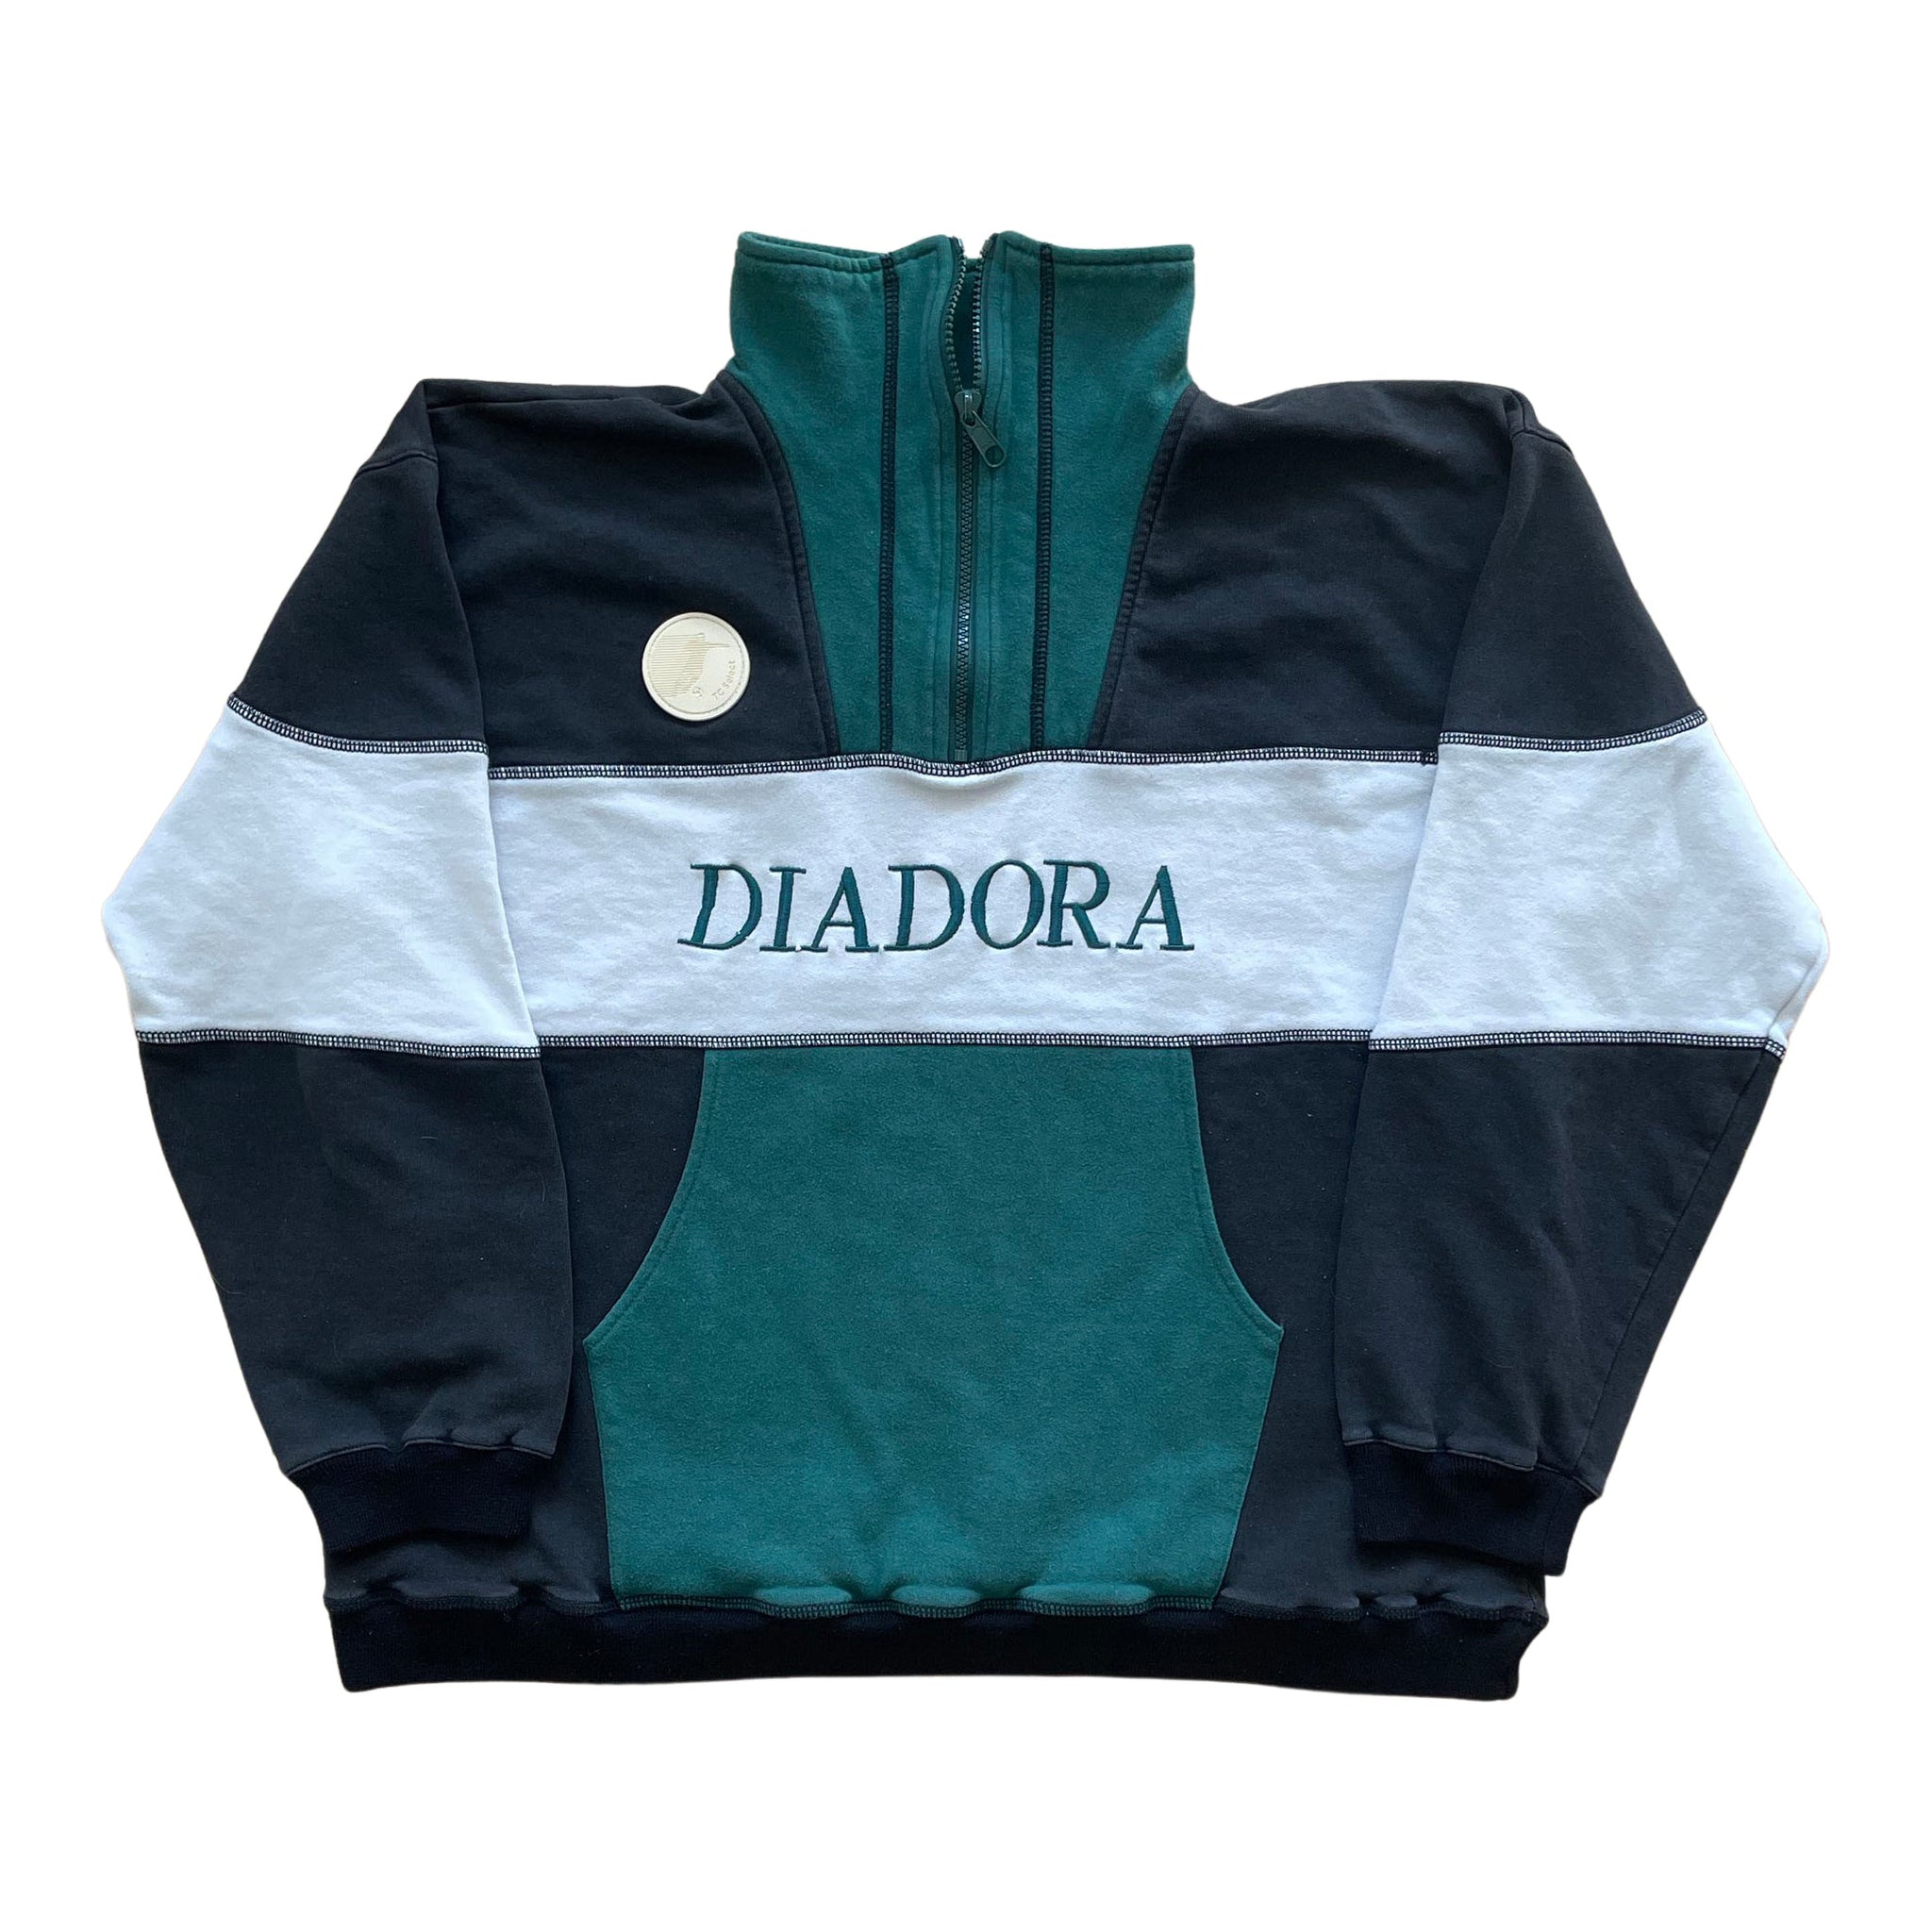 Diadora Italia Embroidered ¼-Zip - M